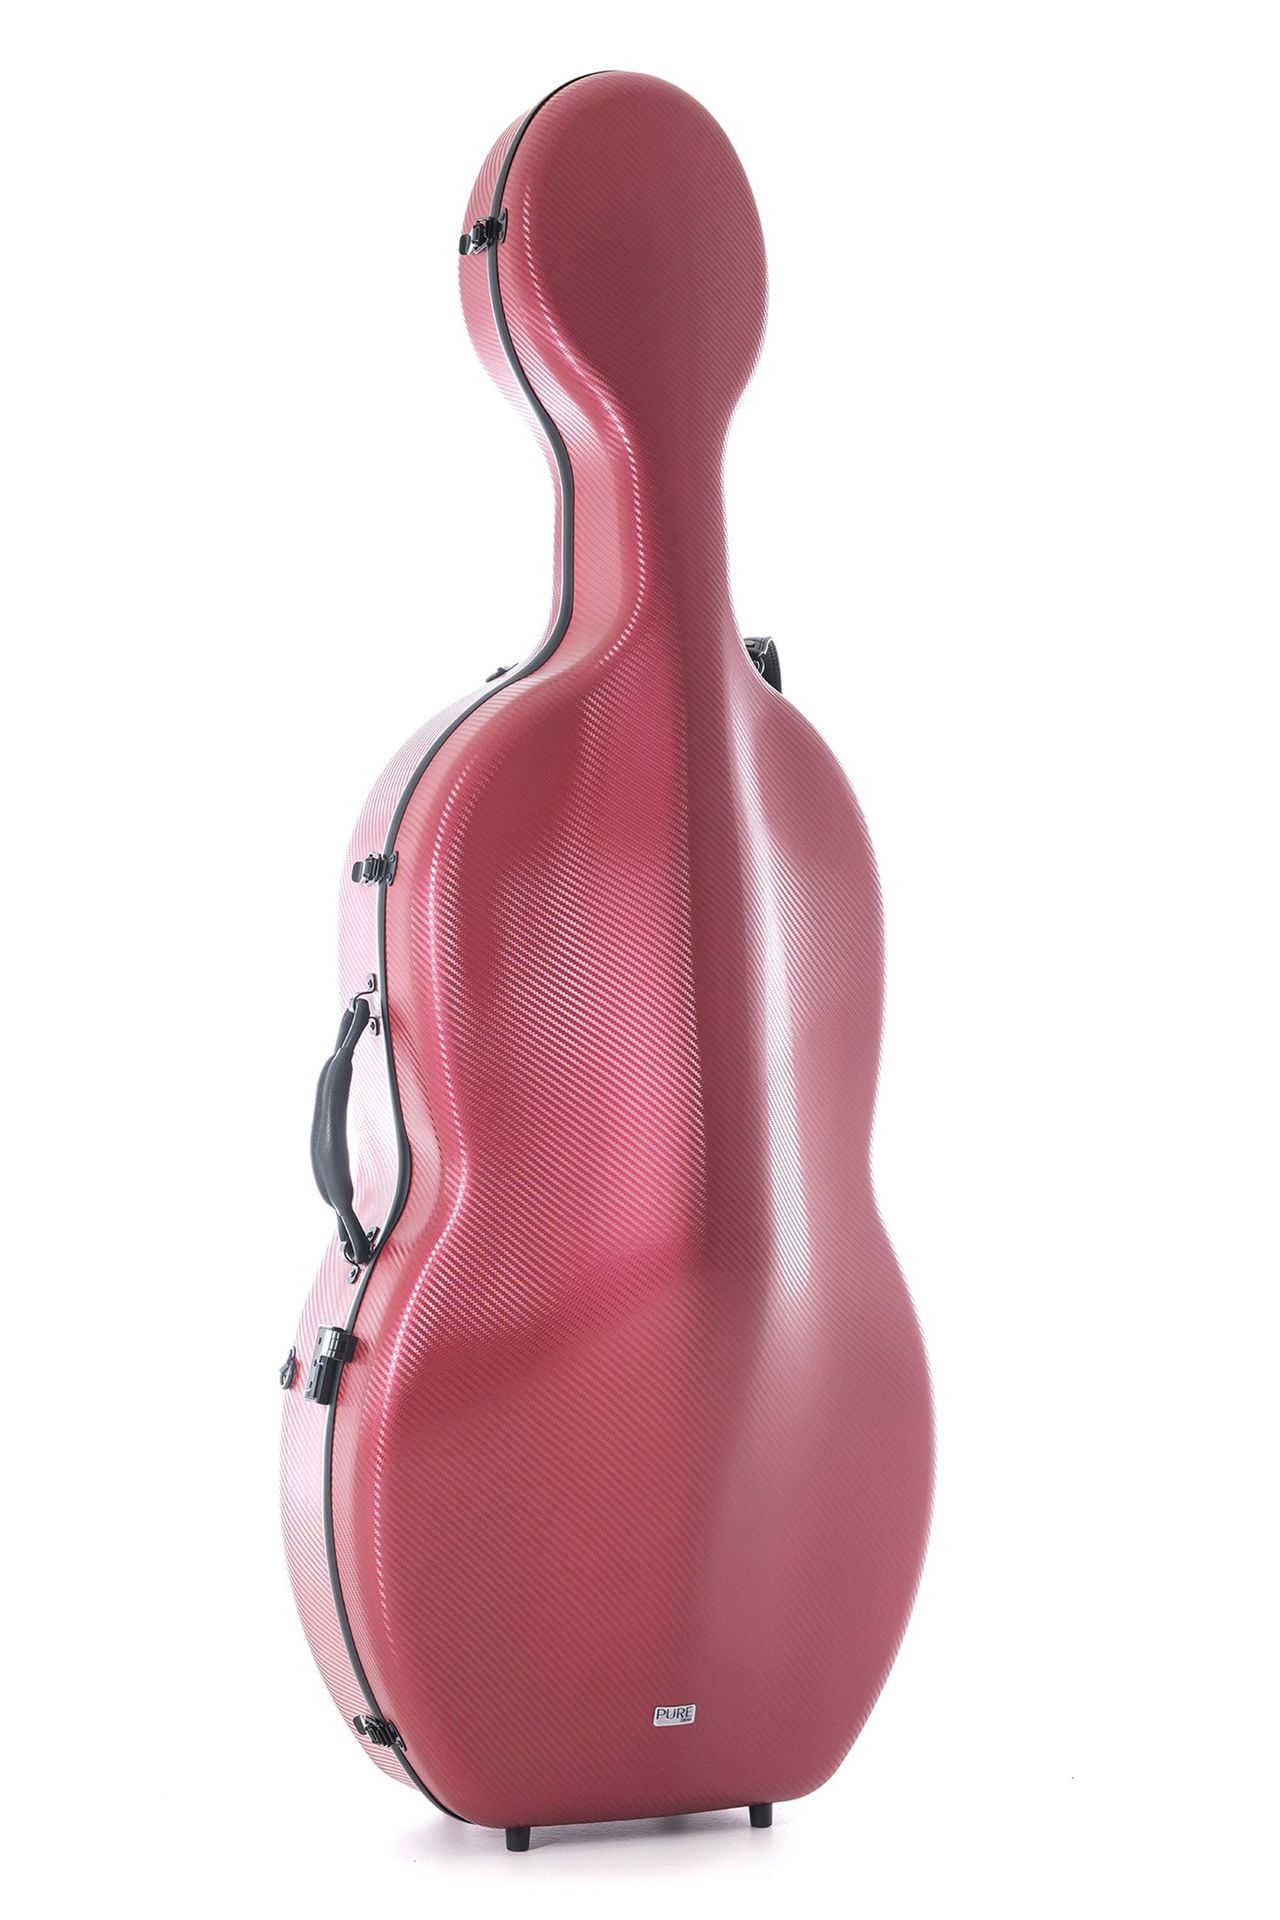 Cello-Etui rot 4/4 Polycarbonat 4,6 kg  - abnehmbare Rucksackriemen Cello Case 